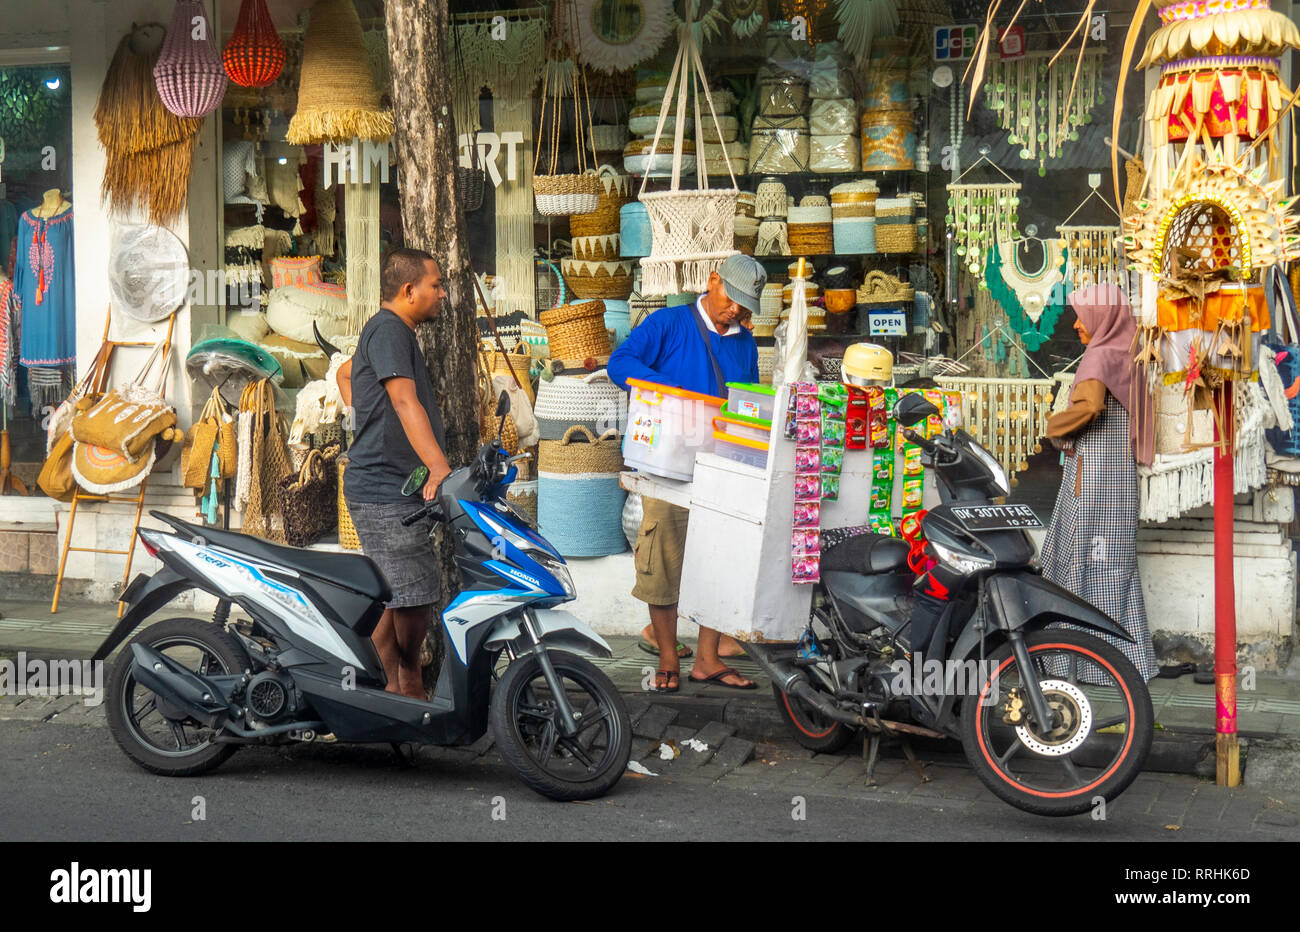 Man loading goods onto a motorbike in Kuta, Bali, Indonesia. Stock Photo